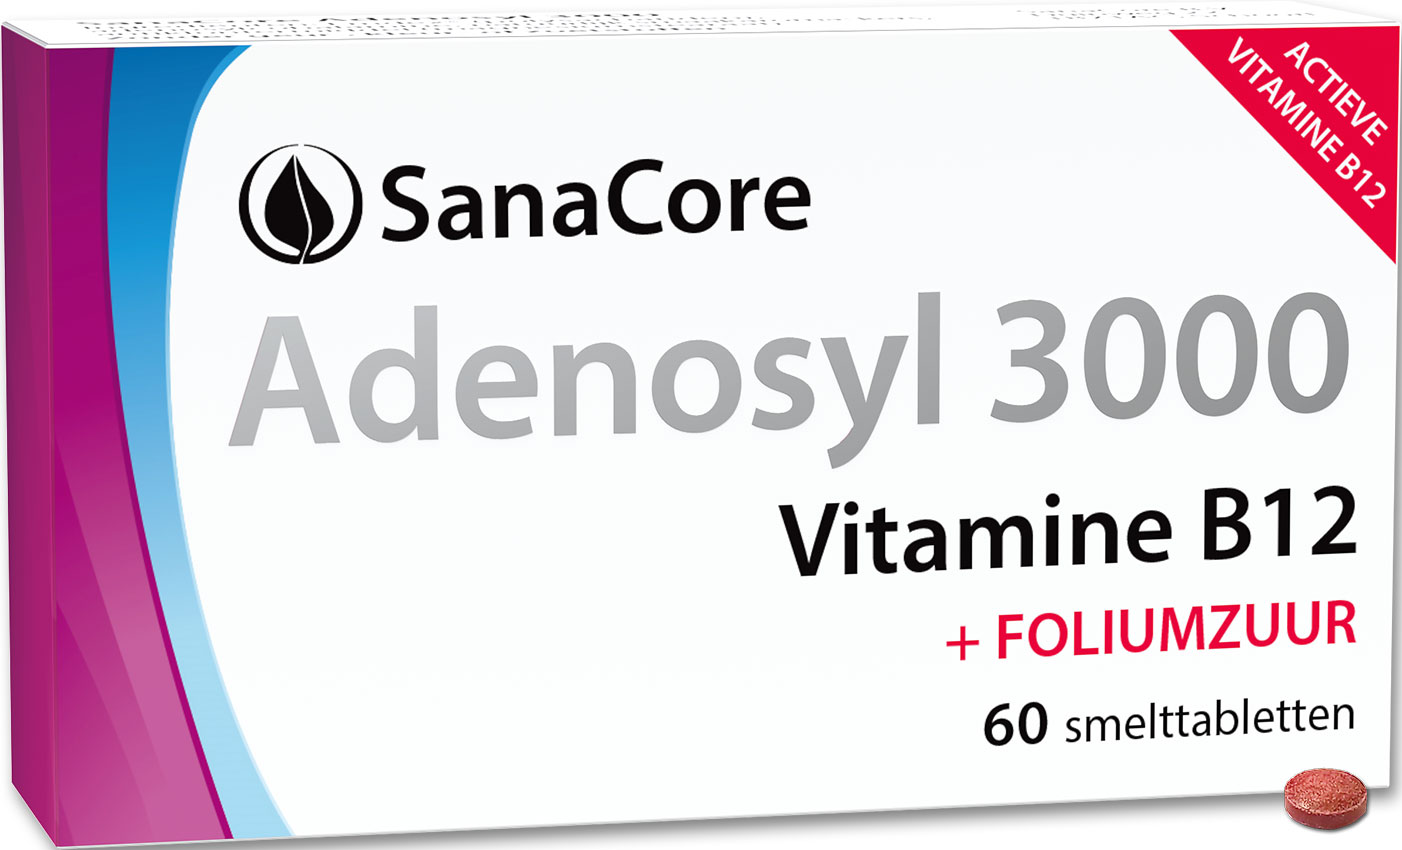 SanaCore Adenosyl 3000